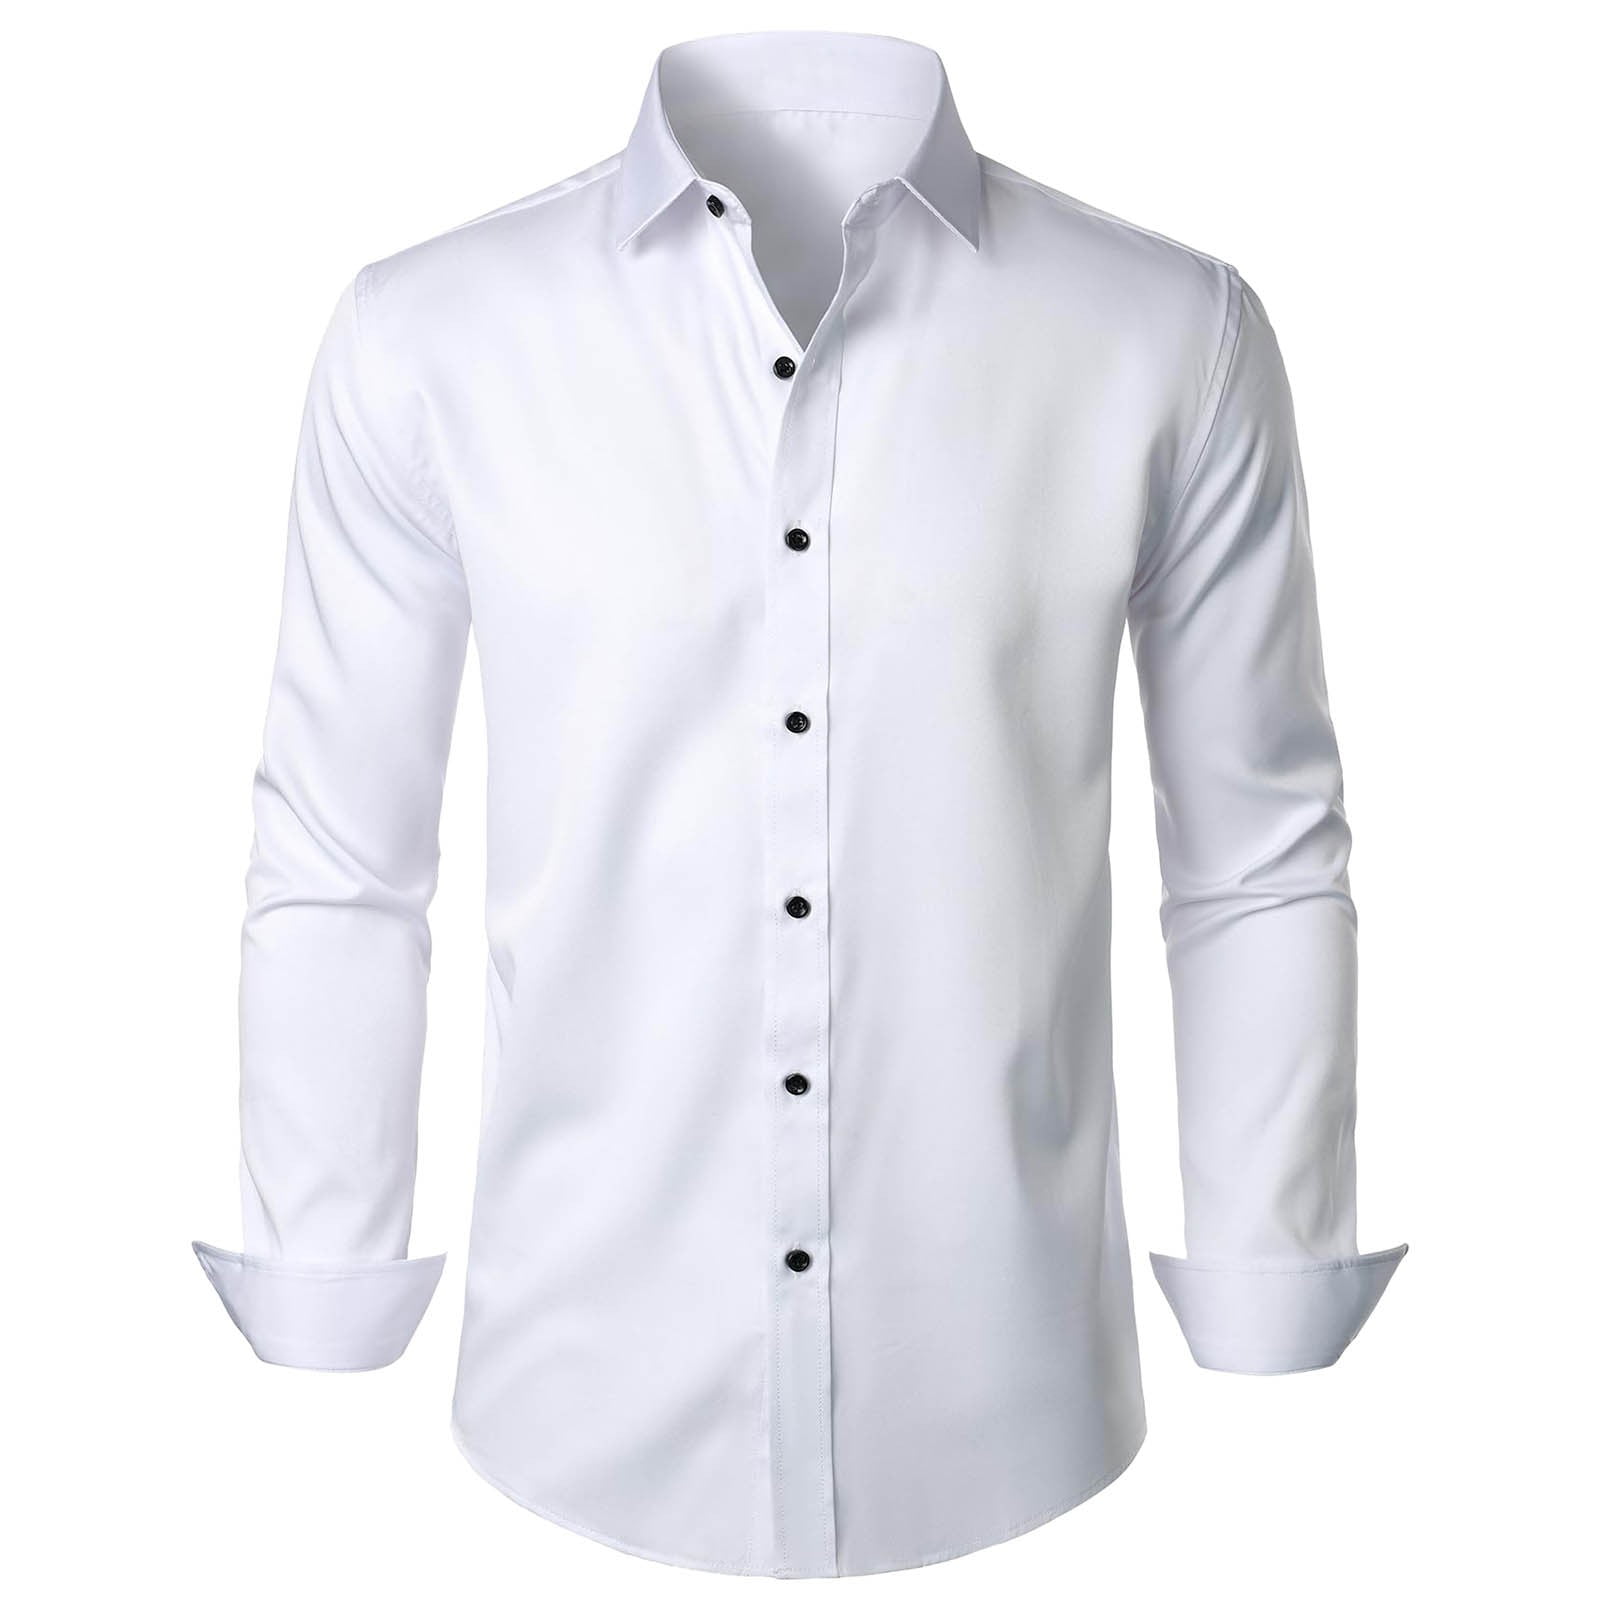 GAQLIVE Slik Social Dress Shirts For Men Male Stretch Dress Shirts ...